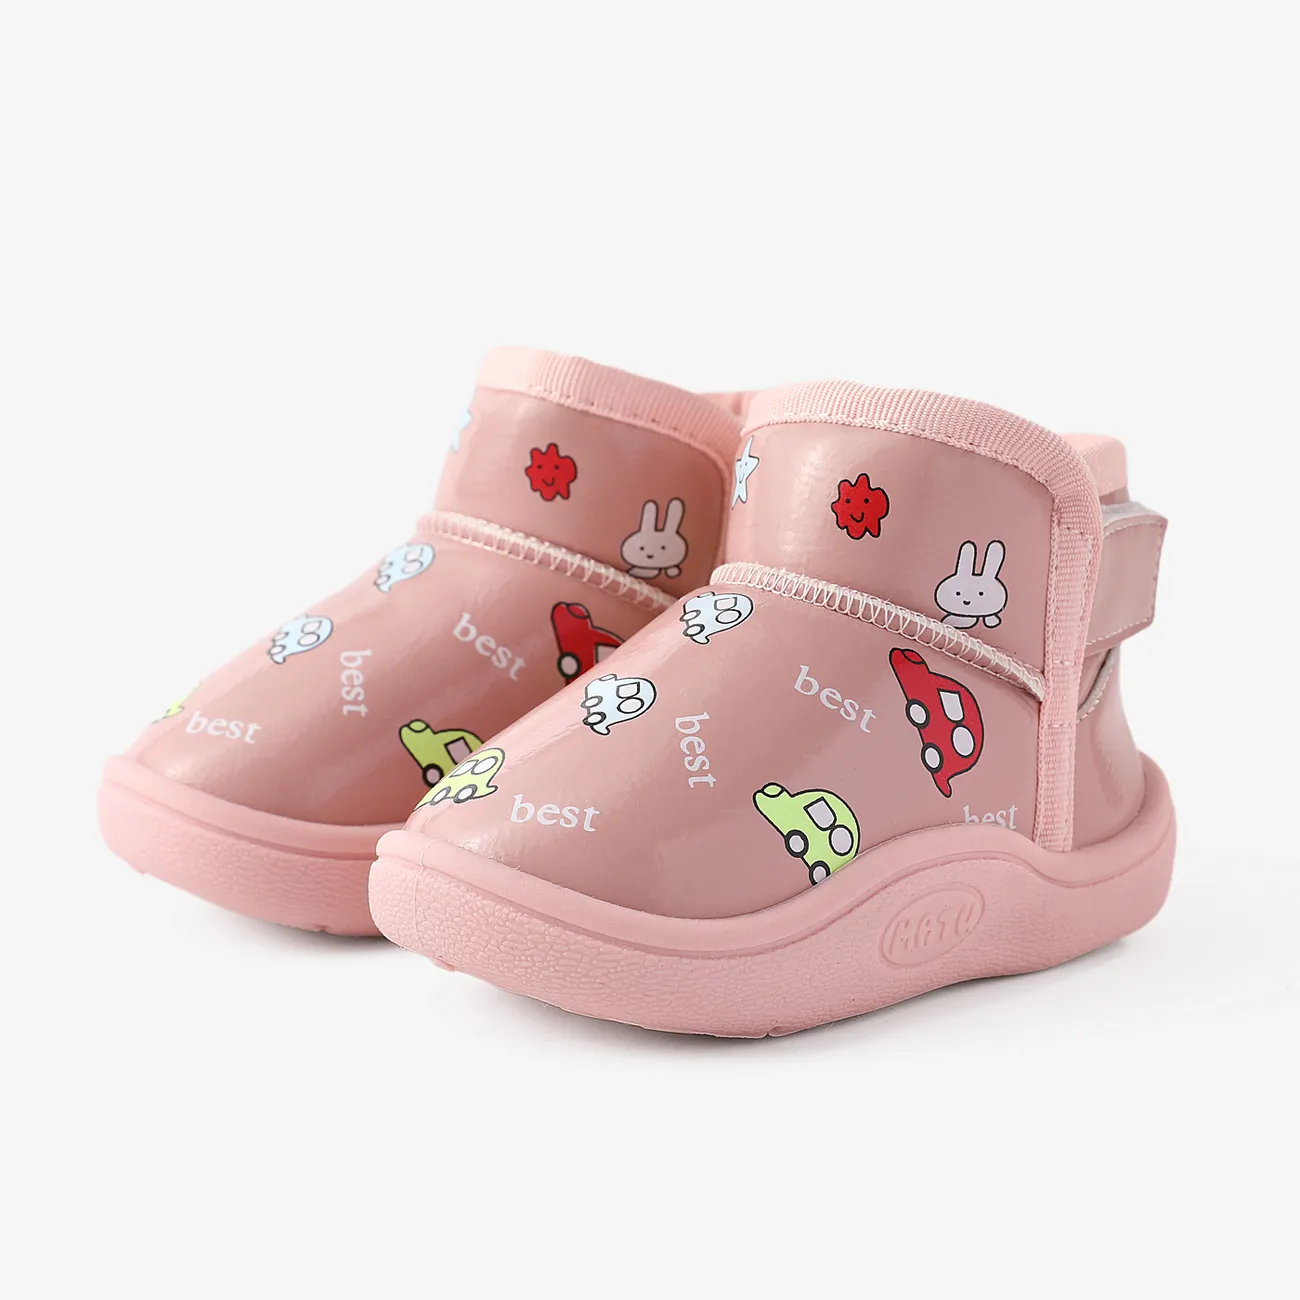 Toddler & Kids Childlike Cartoon Vehicle & Rabbit Print Fleece Snow Boots Dark Pink big image 1